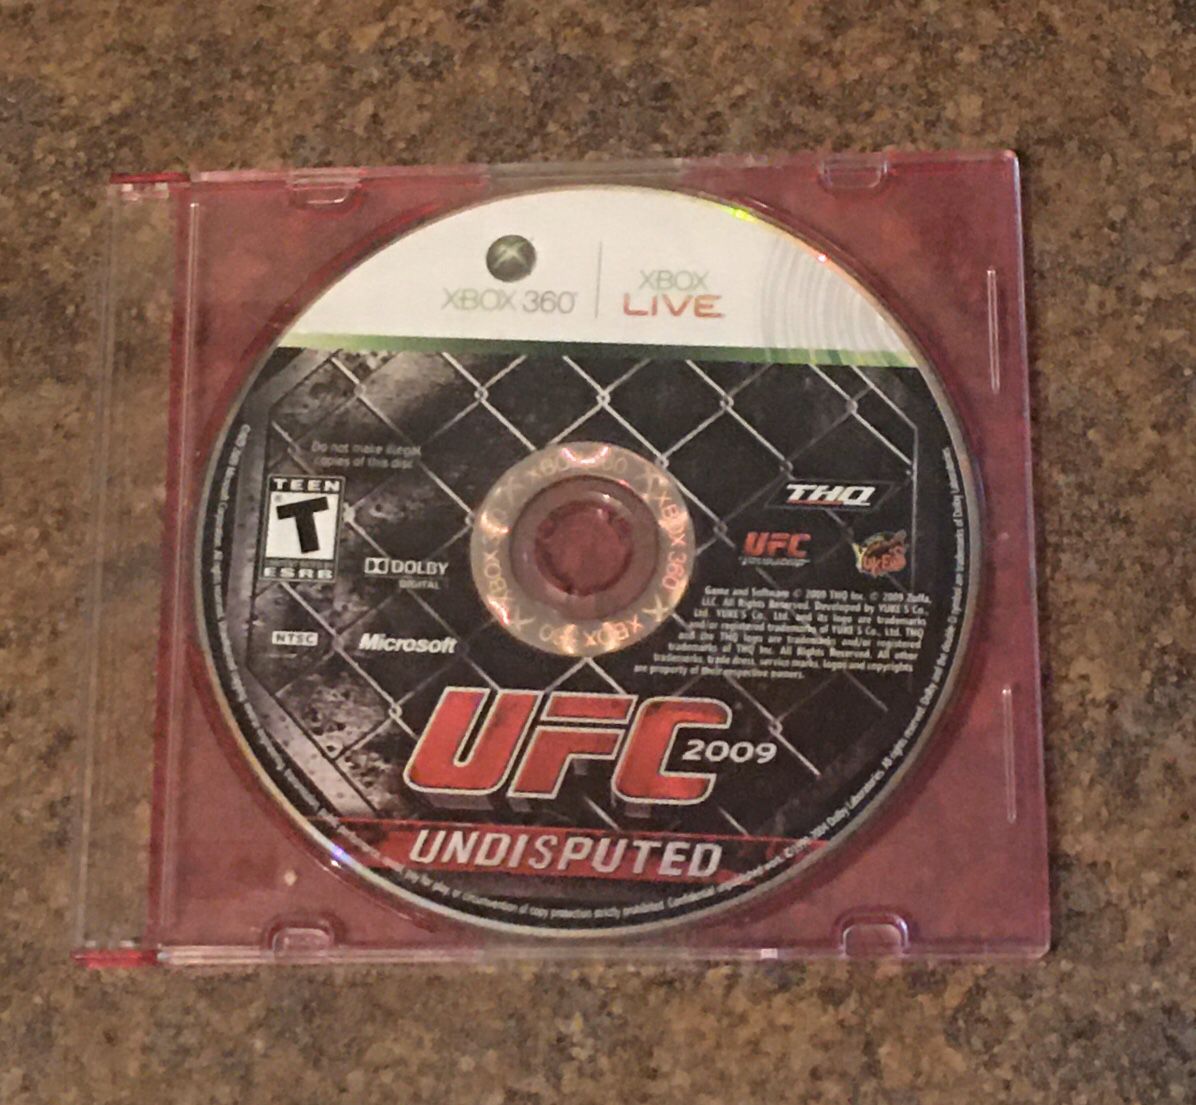 Microsoft XBOX 360 UFC 2009 Undisputed Video Game